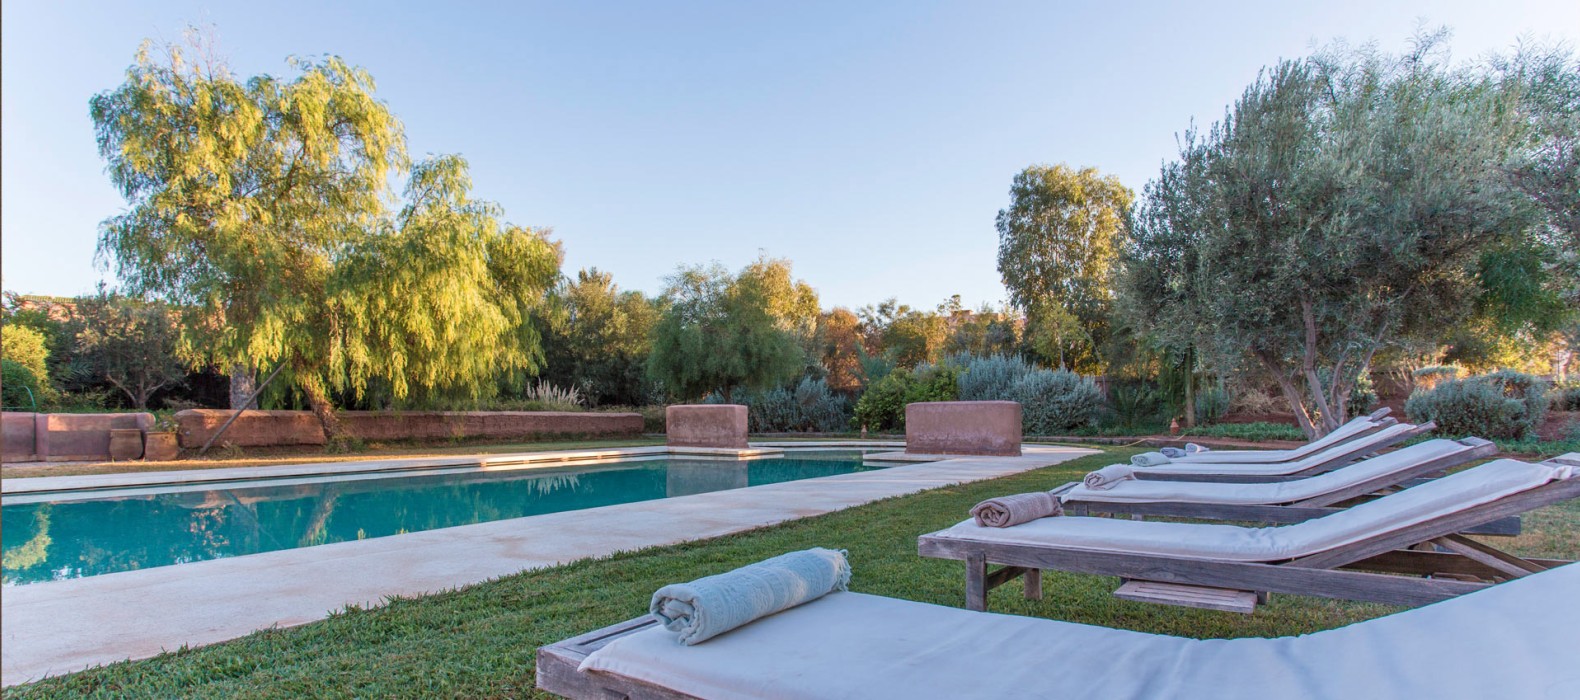 Sun loungers view of Villa Gauthier in Marrakech